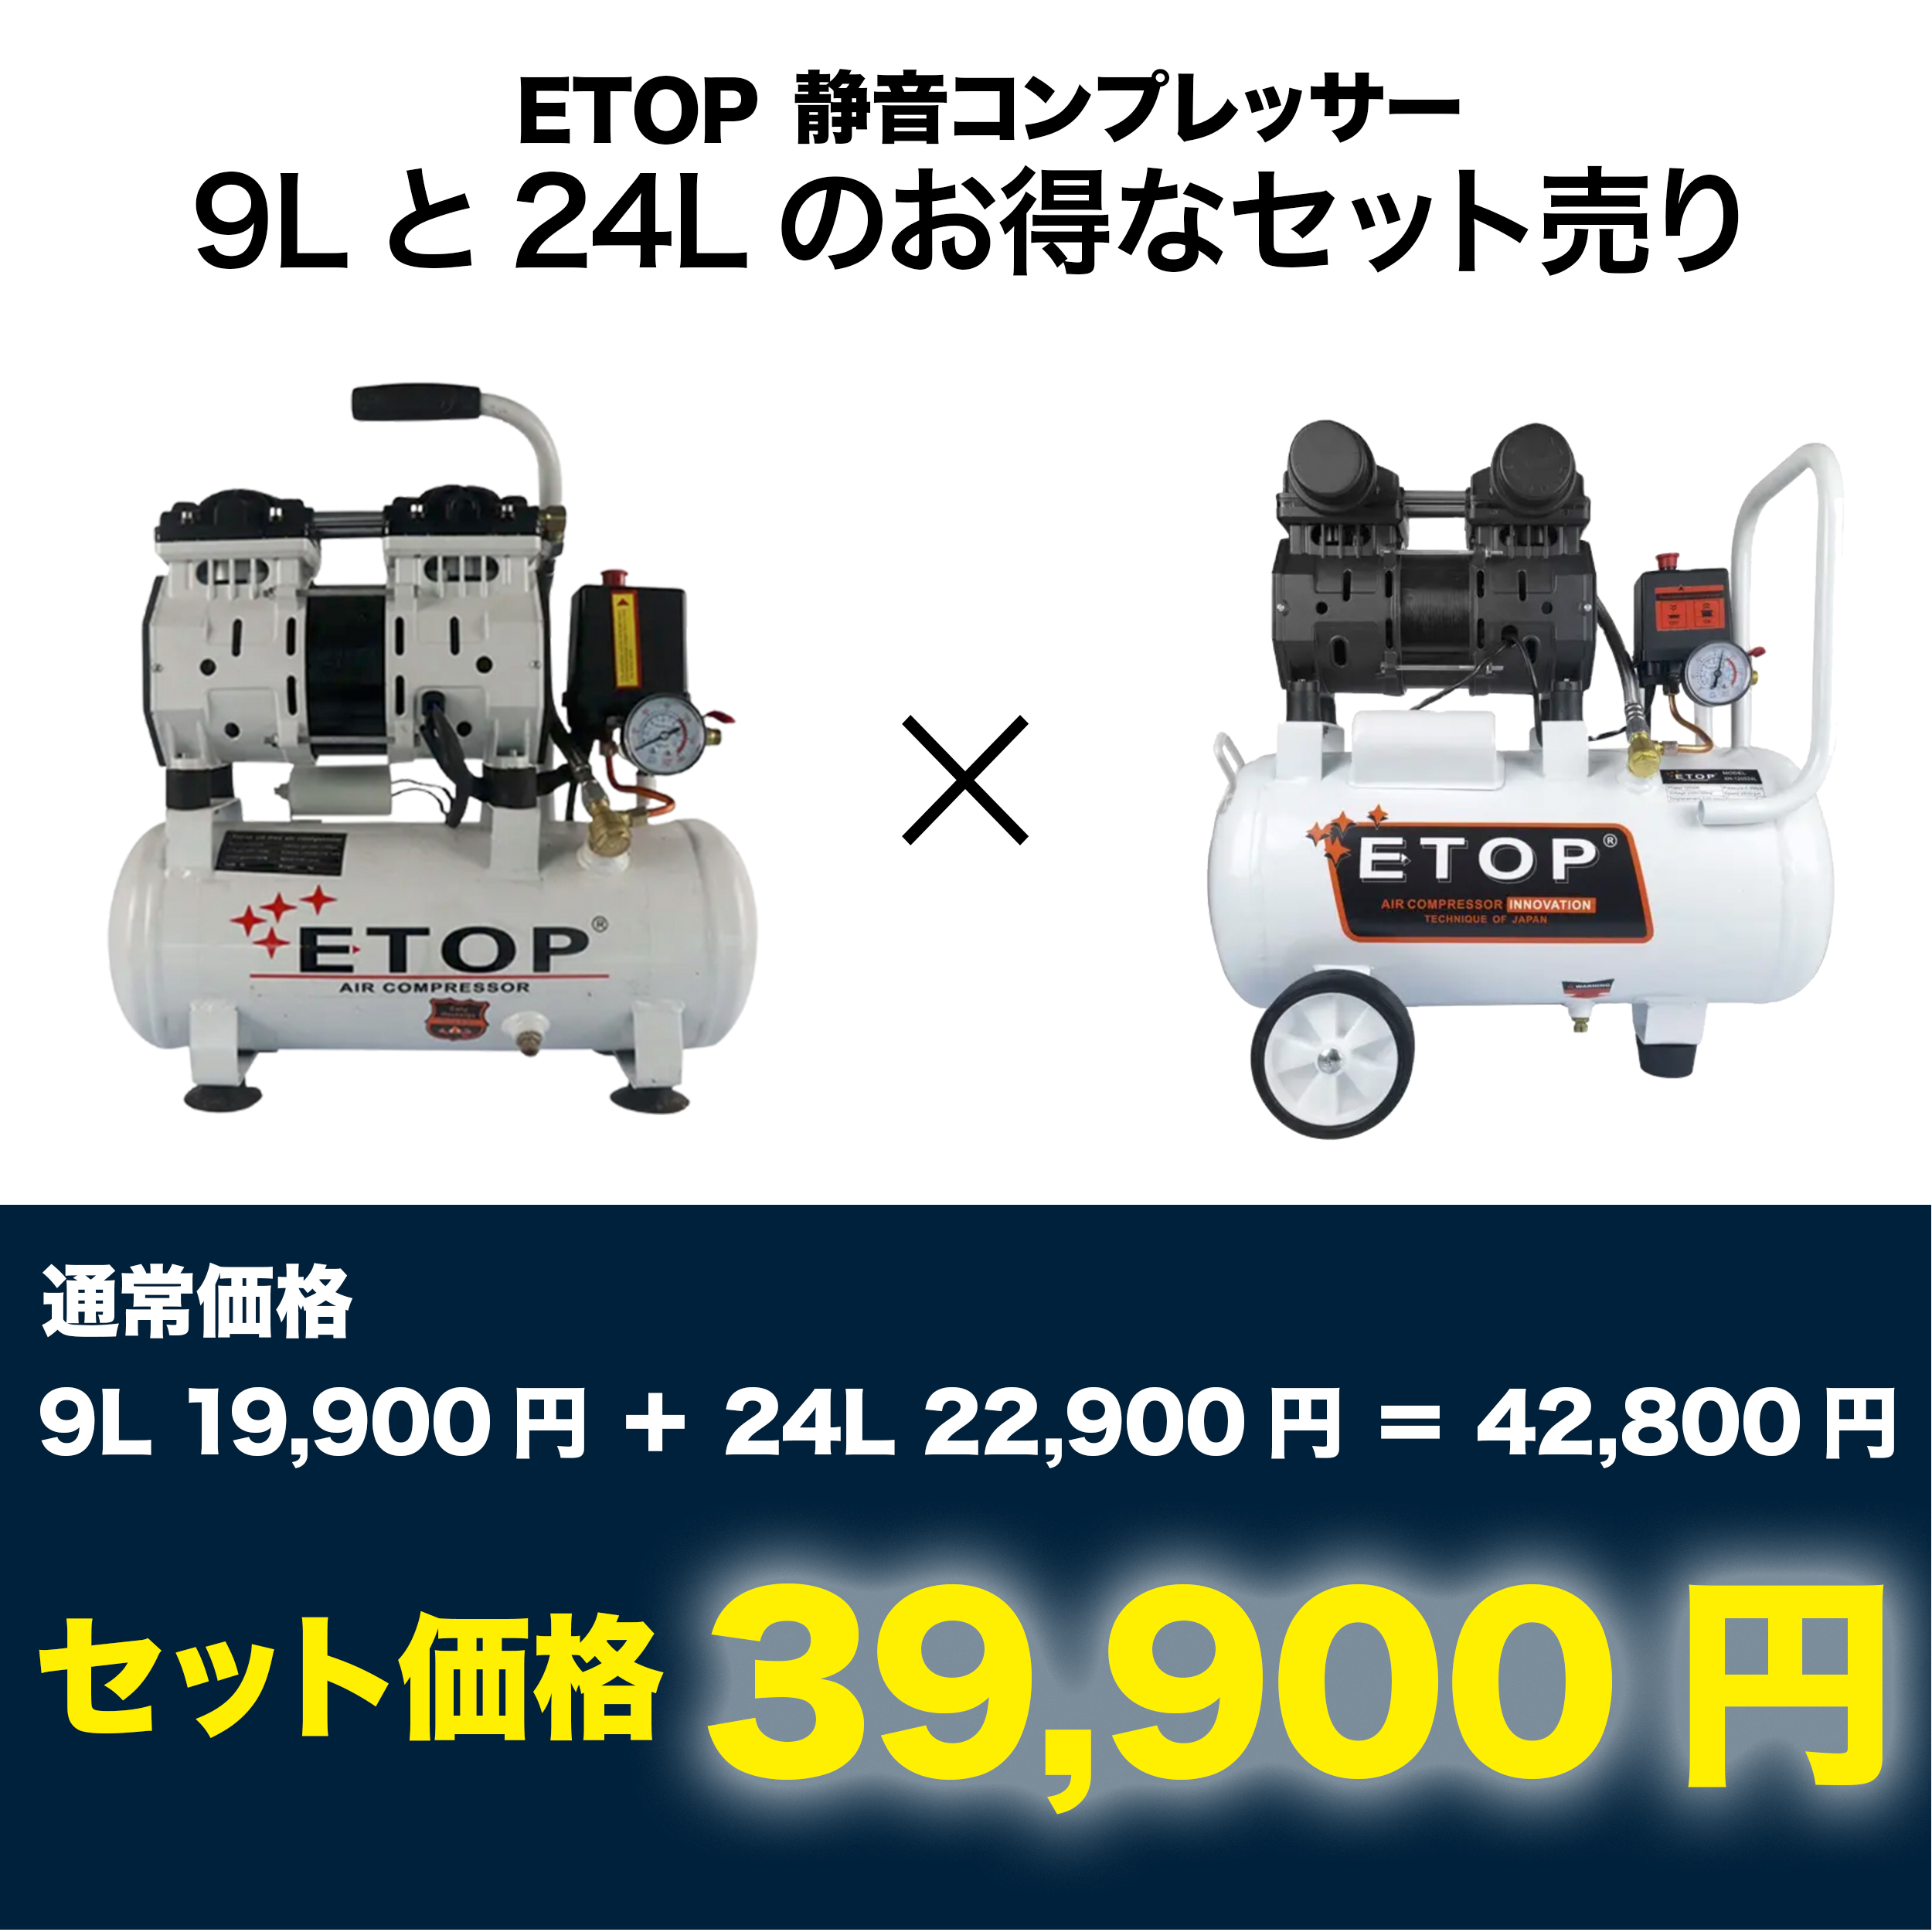 9L・24Lセット売りエアーコンプレッサー静音オイルレス型100V【ETOP